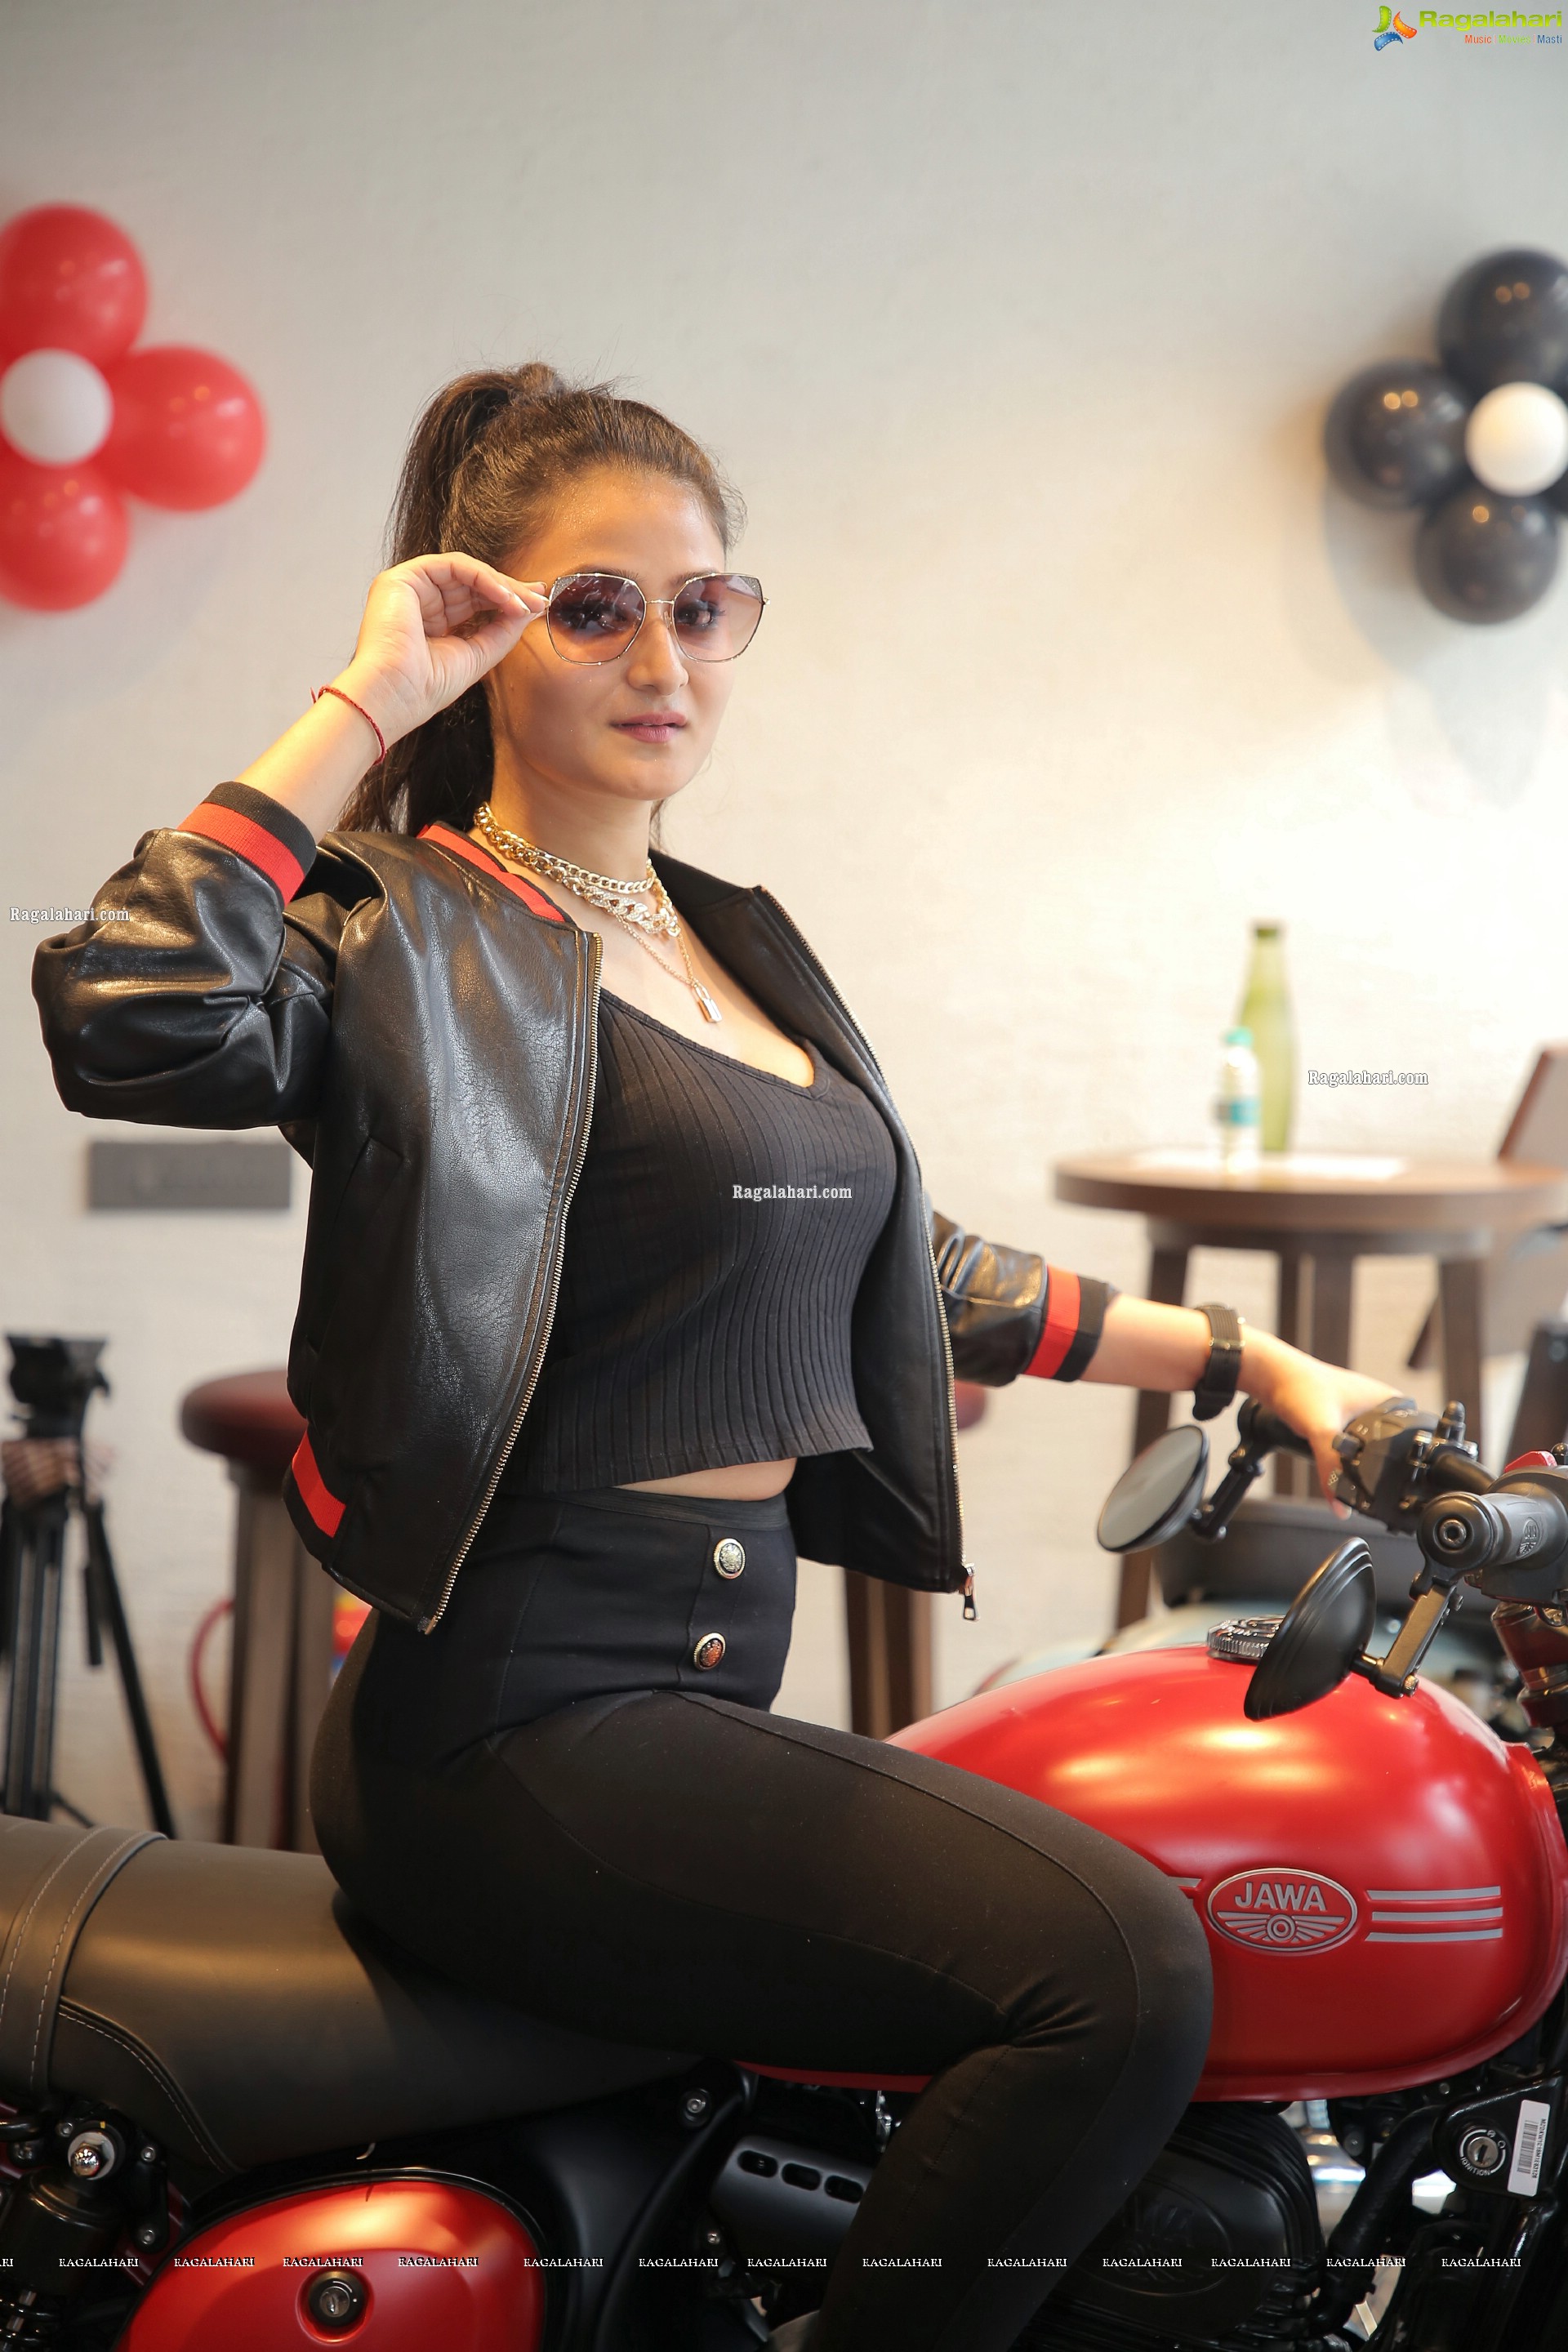 Nilofer Haidry Posing on a Bike Wearing Leather Jacket, HD Photo Gallery